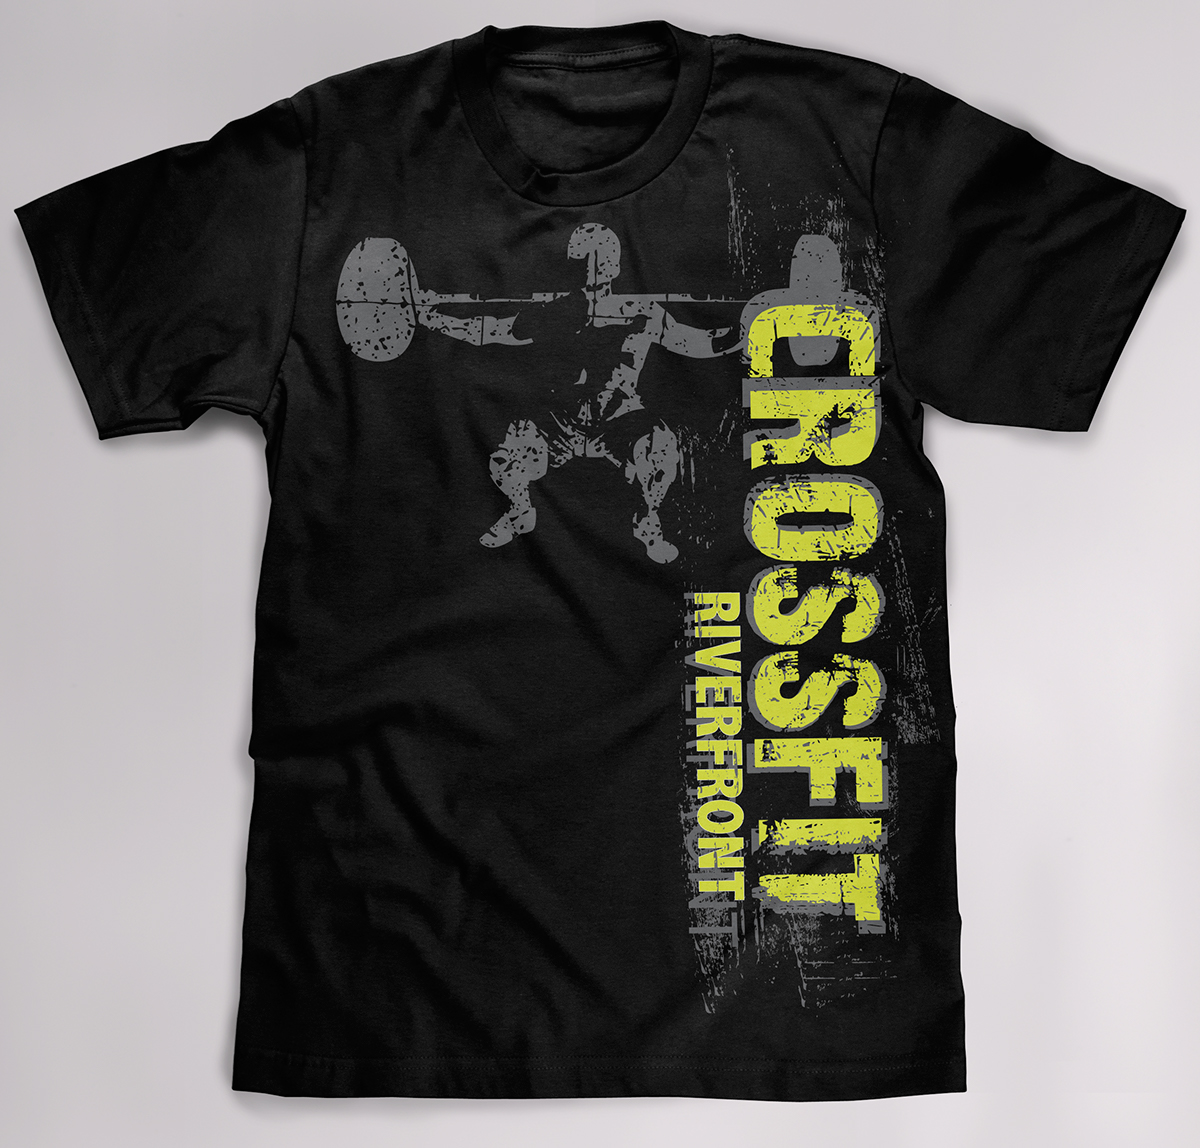 Adobe Portfolio Crossfit sports athletic apparel t-shirts weights